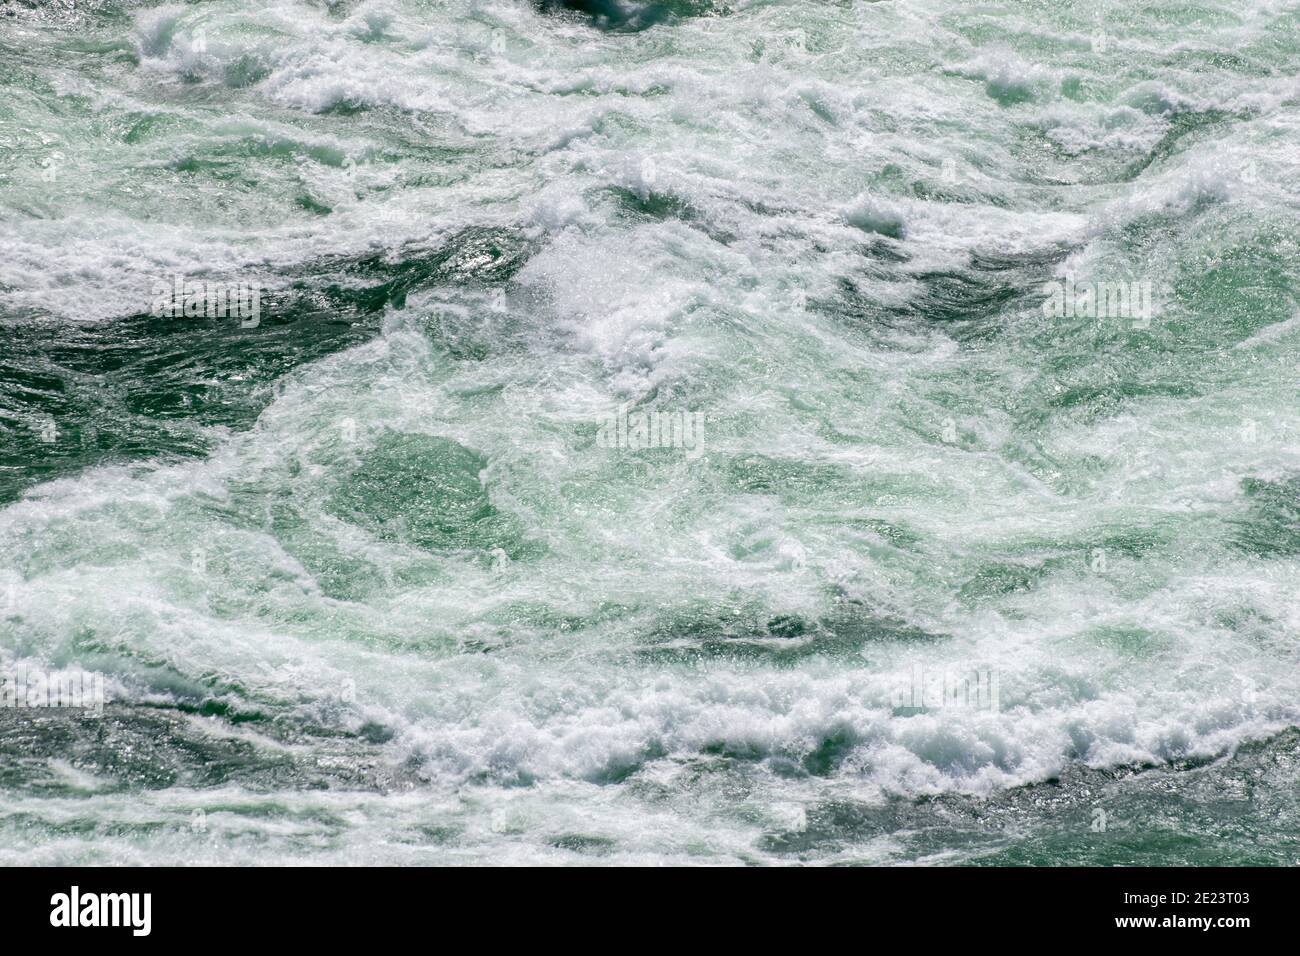 Agua de río turbulenta para usar como fondo de arte o papel tapiz. Foto de stock